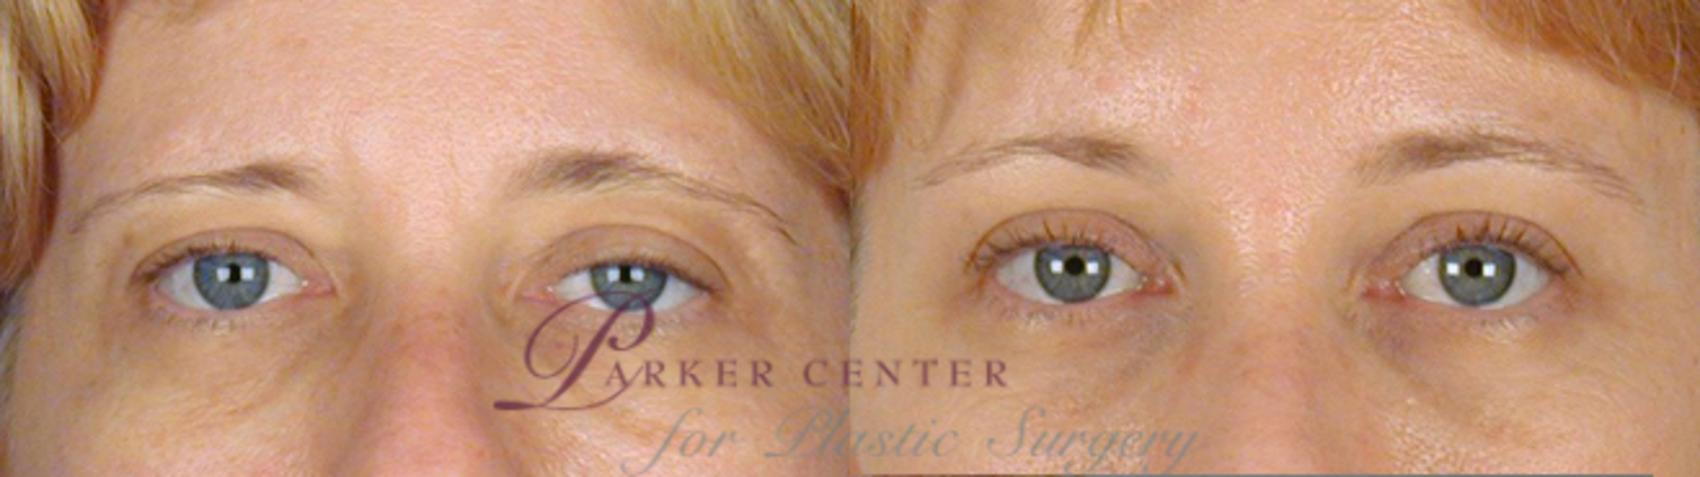 Eyelid Lift Case 56 Before & After View #1 | Paramus, NJ | Parker Center for Plastic Surgery